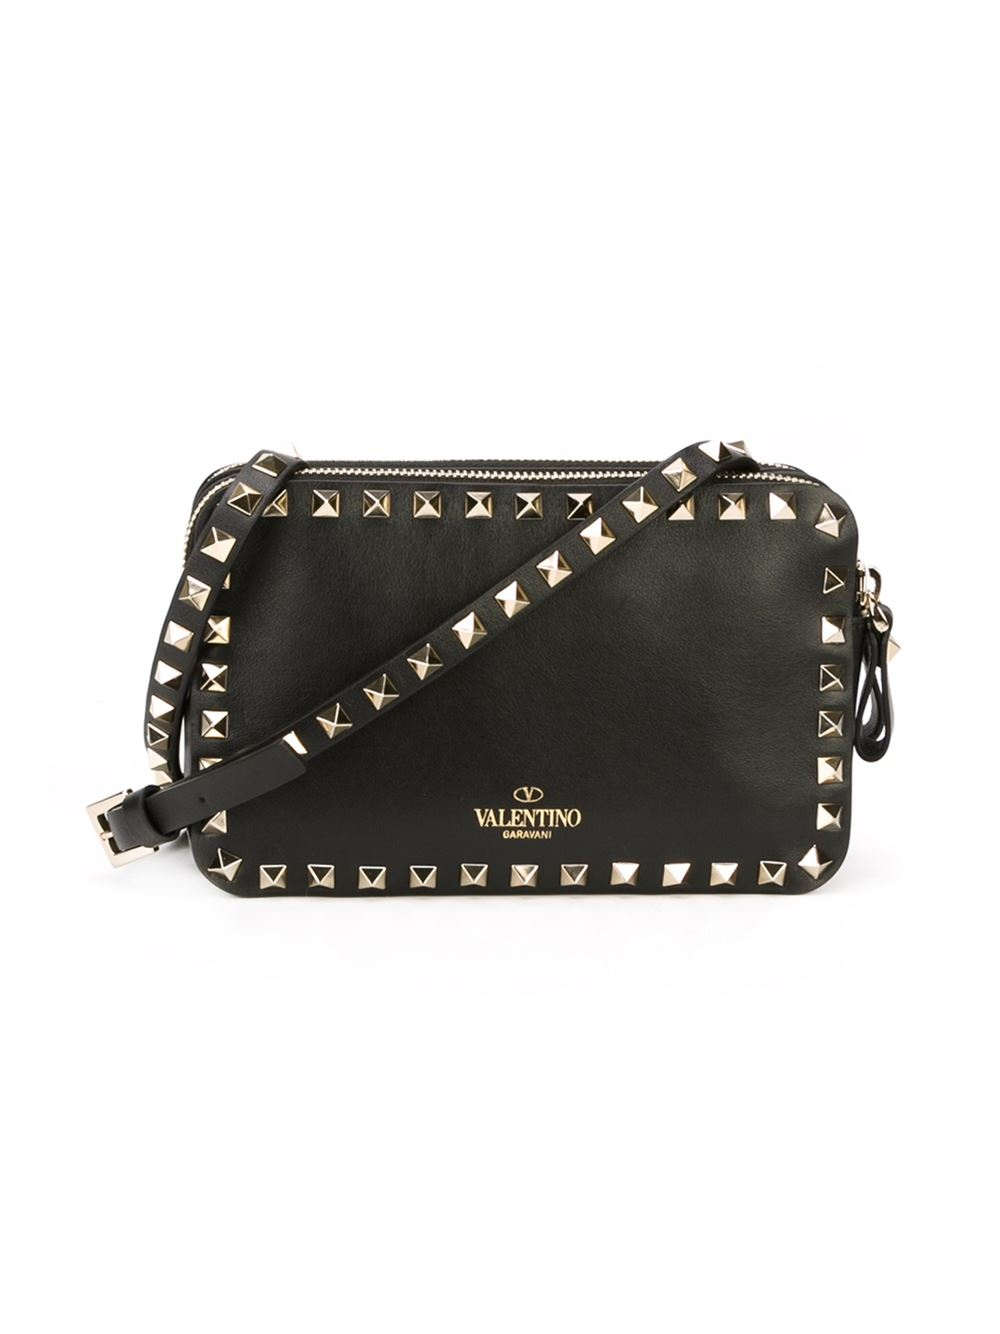 Valentino Rockstud Leather Cross-Body Bag in Black | Lyst